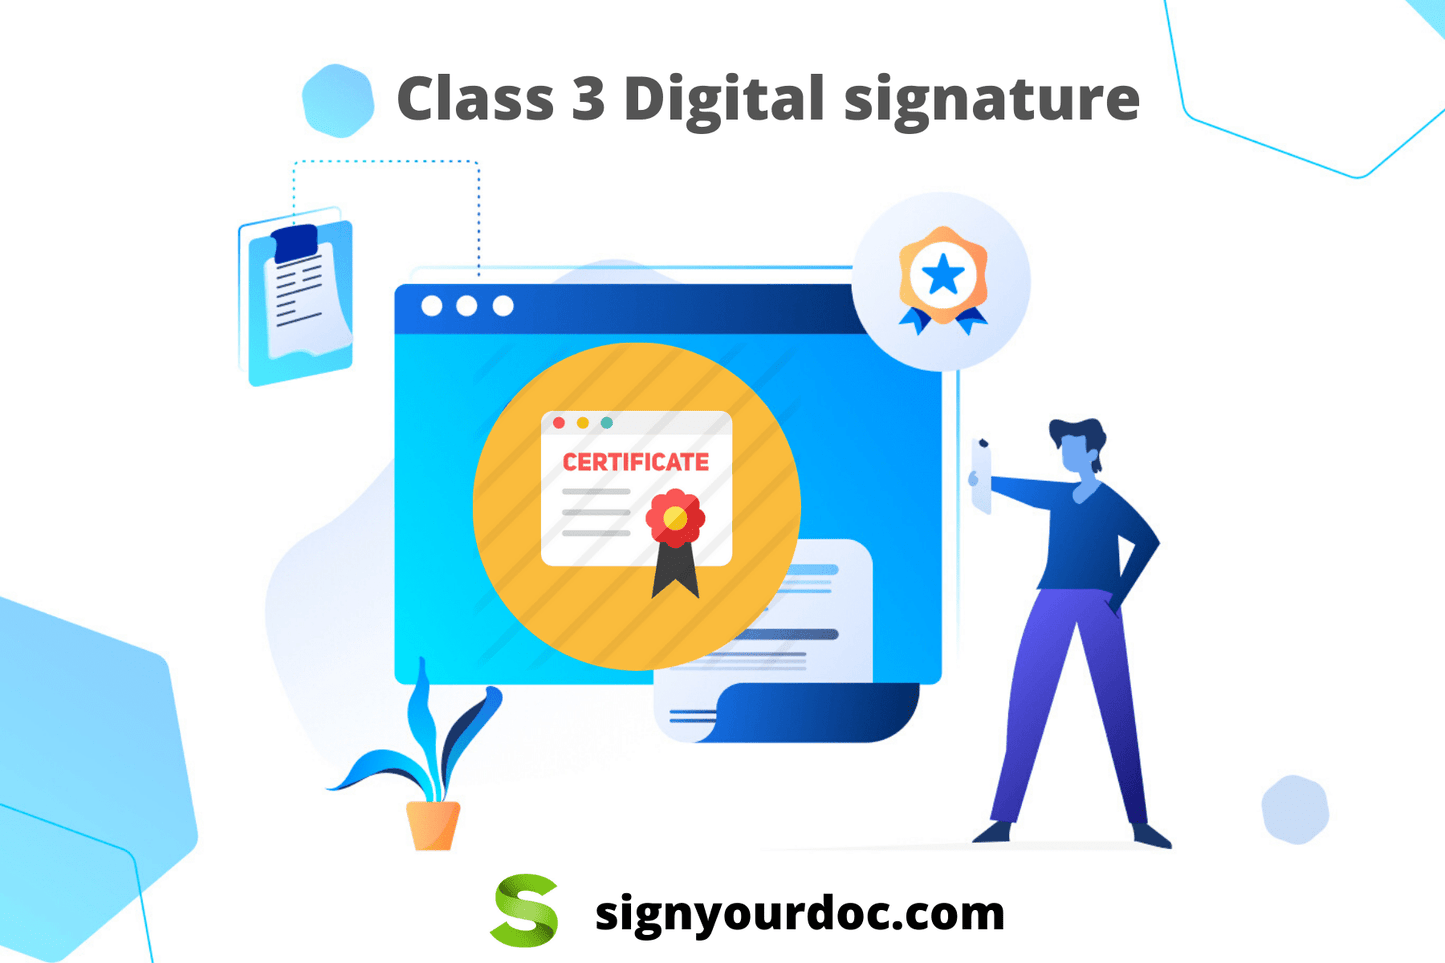 Class 3 Digital signature